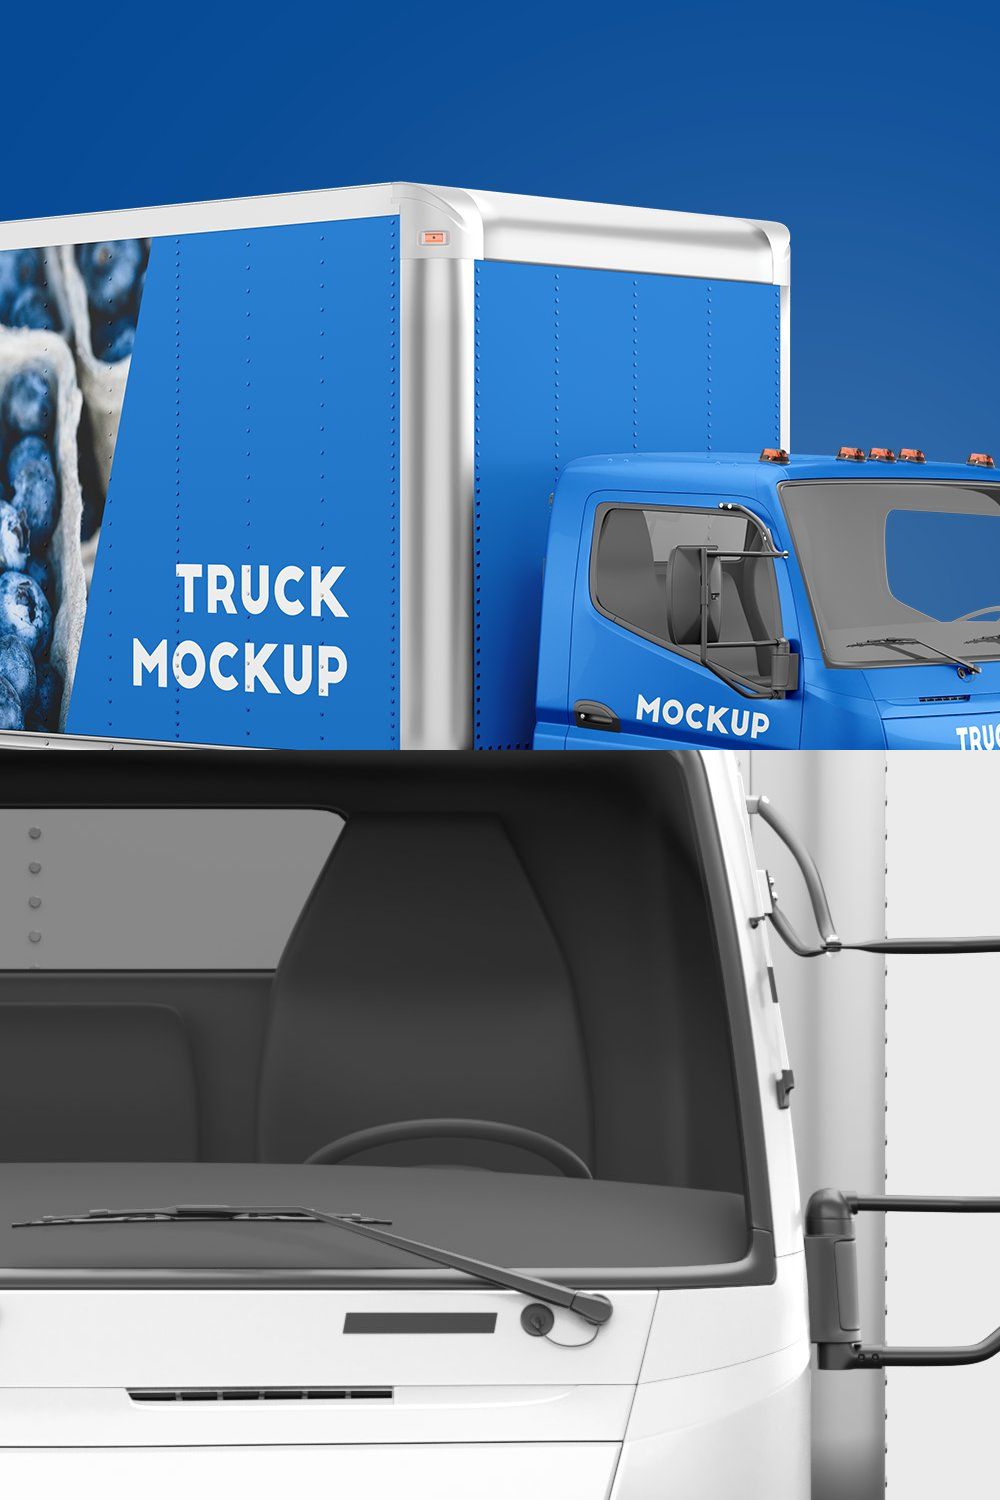 Truck Mockup 4 pinterest preview image.